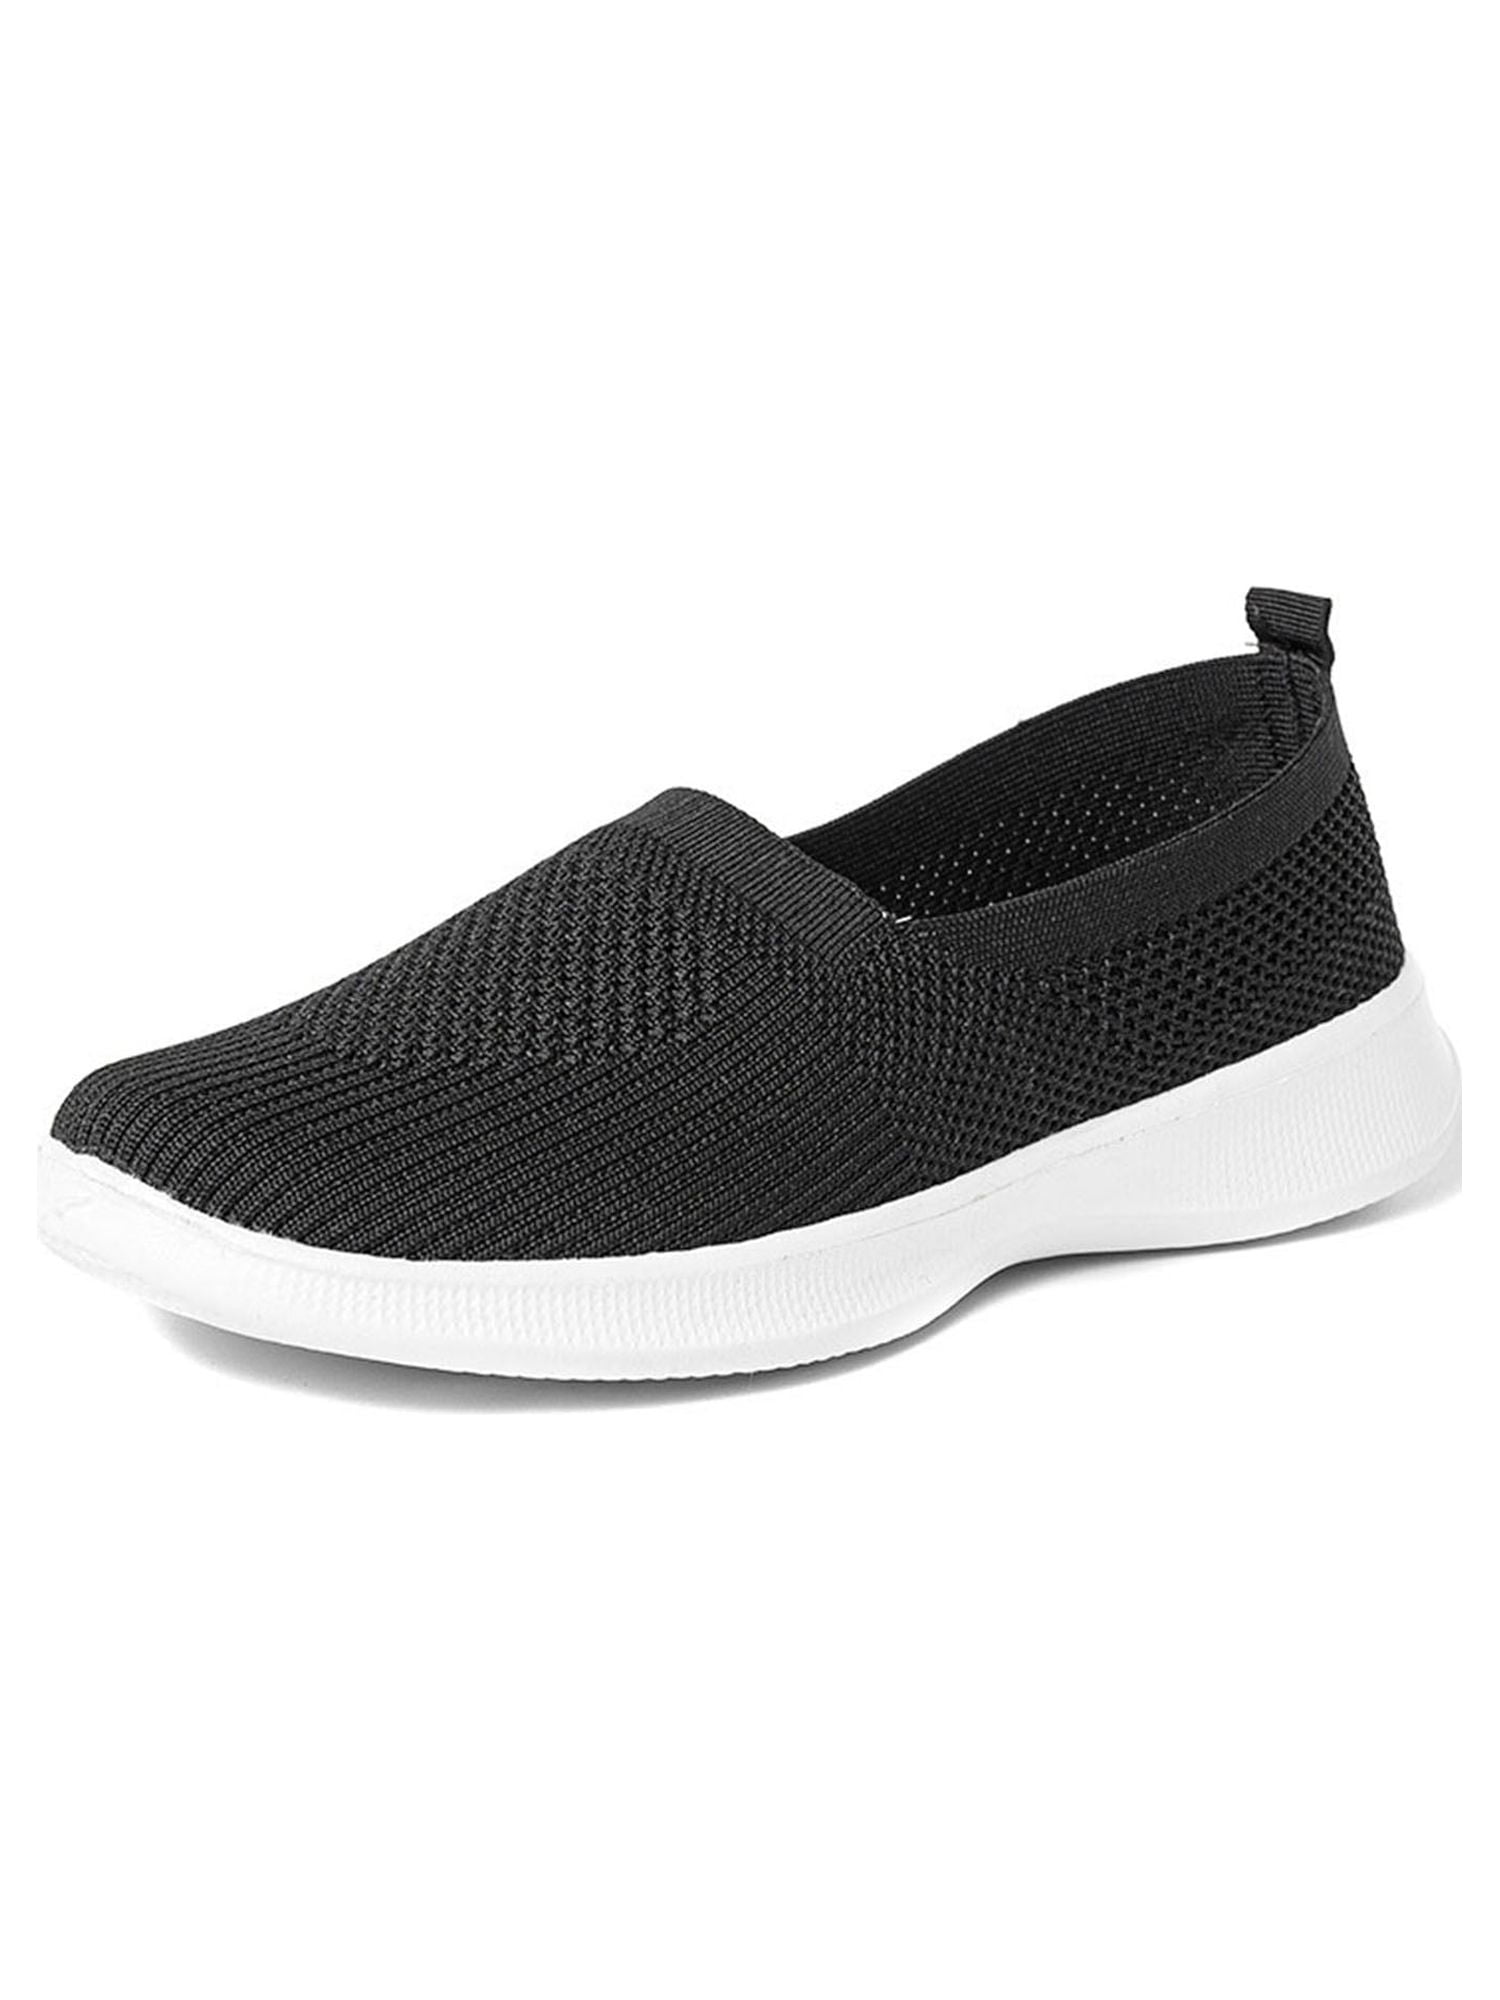 Lacyhop Women's Slip-On Sneakers Wide Width Comfort Walking Shoes ...